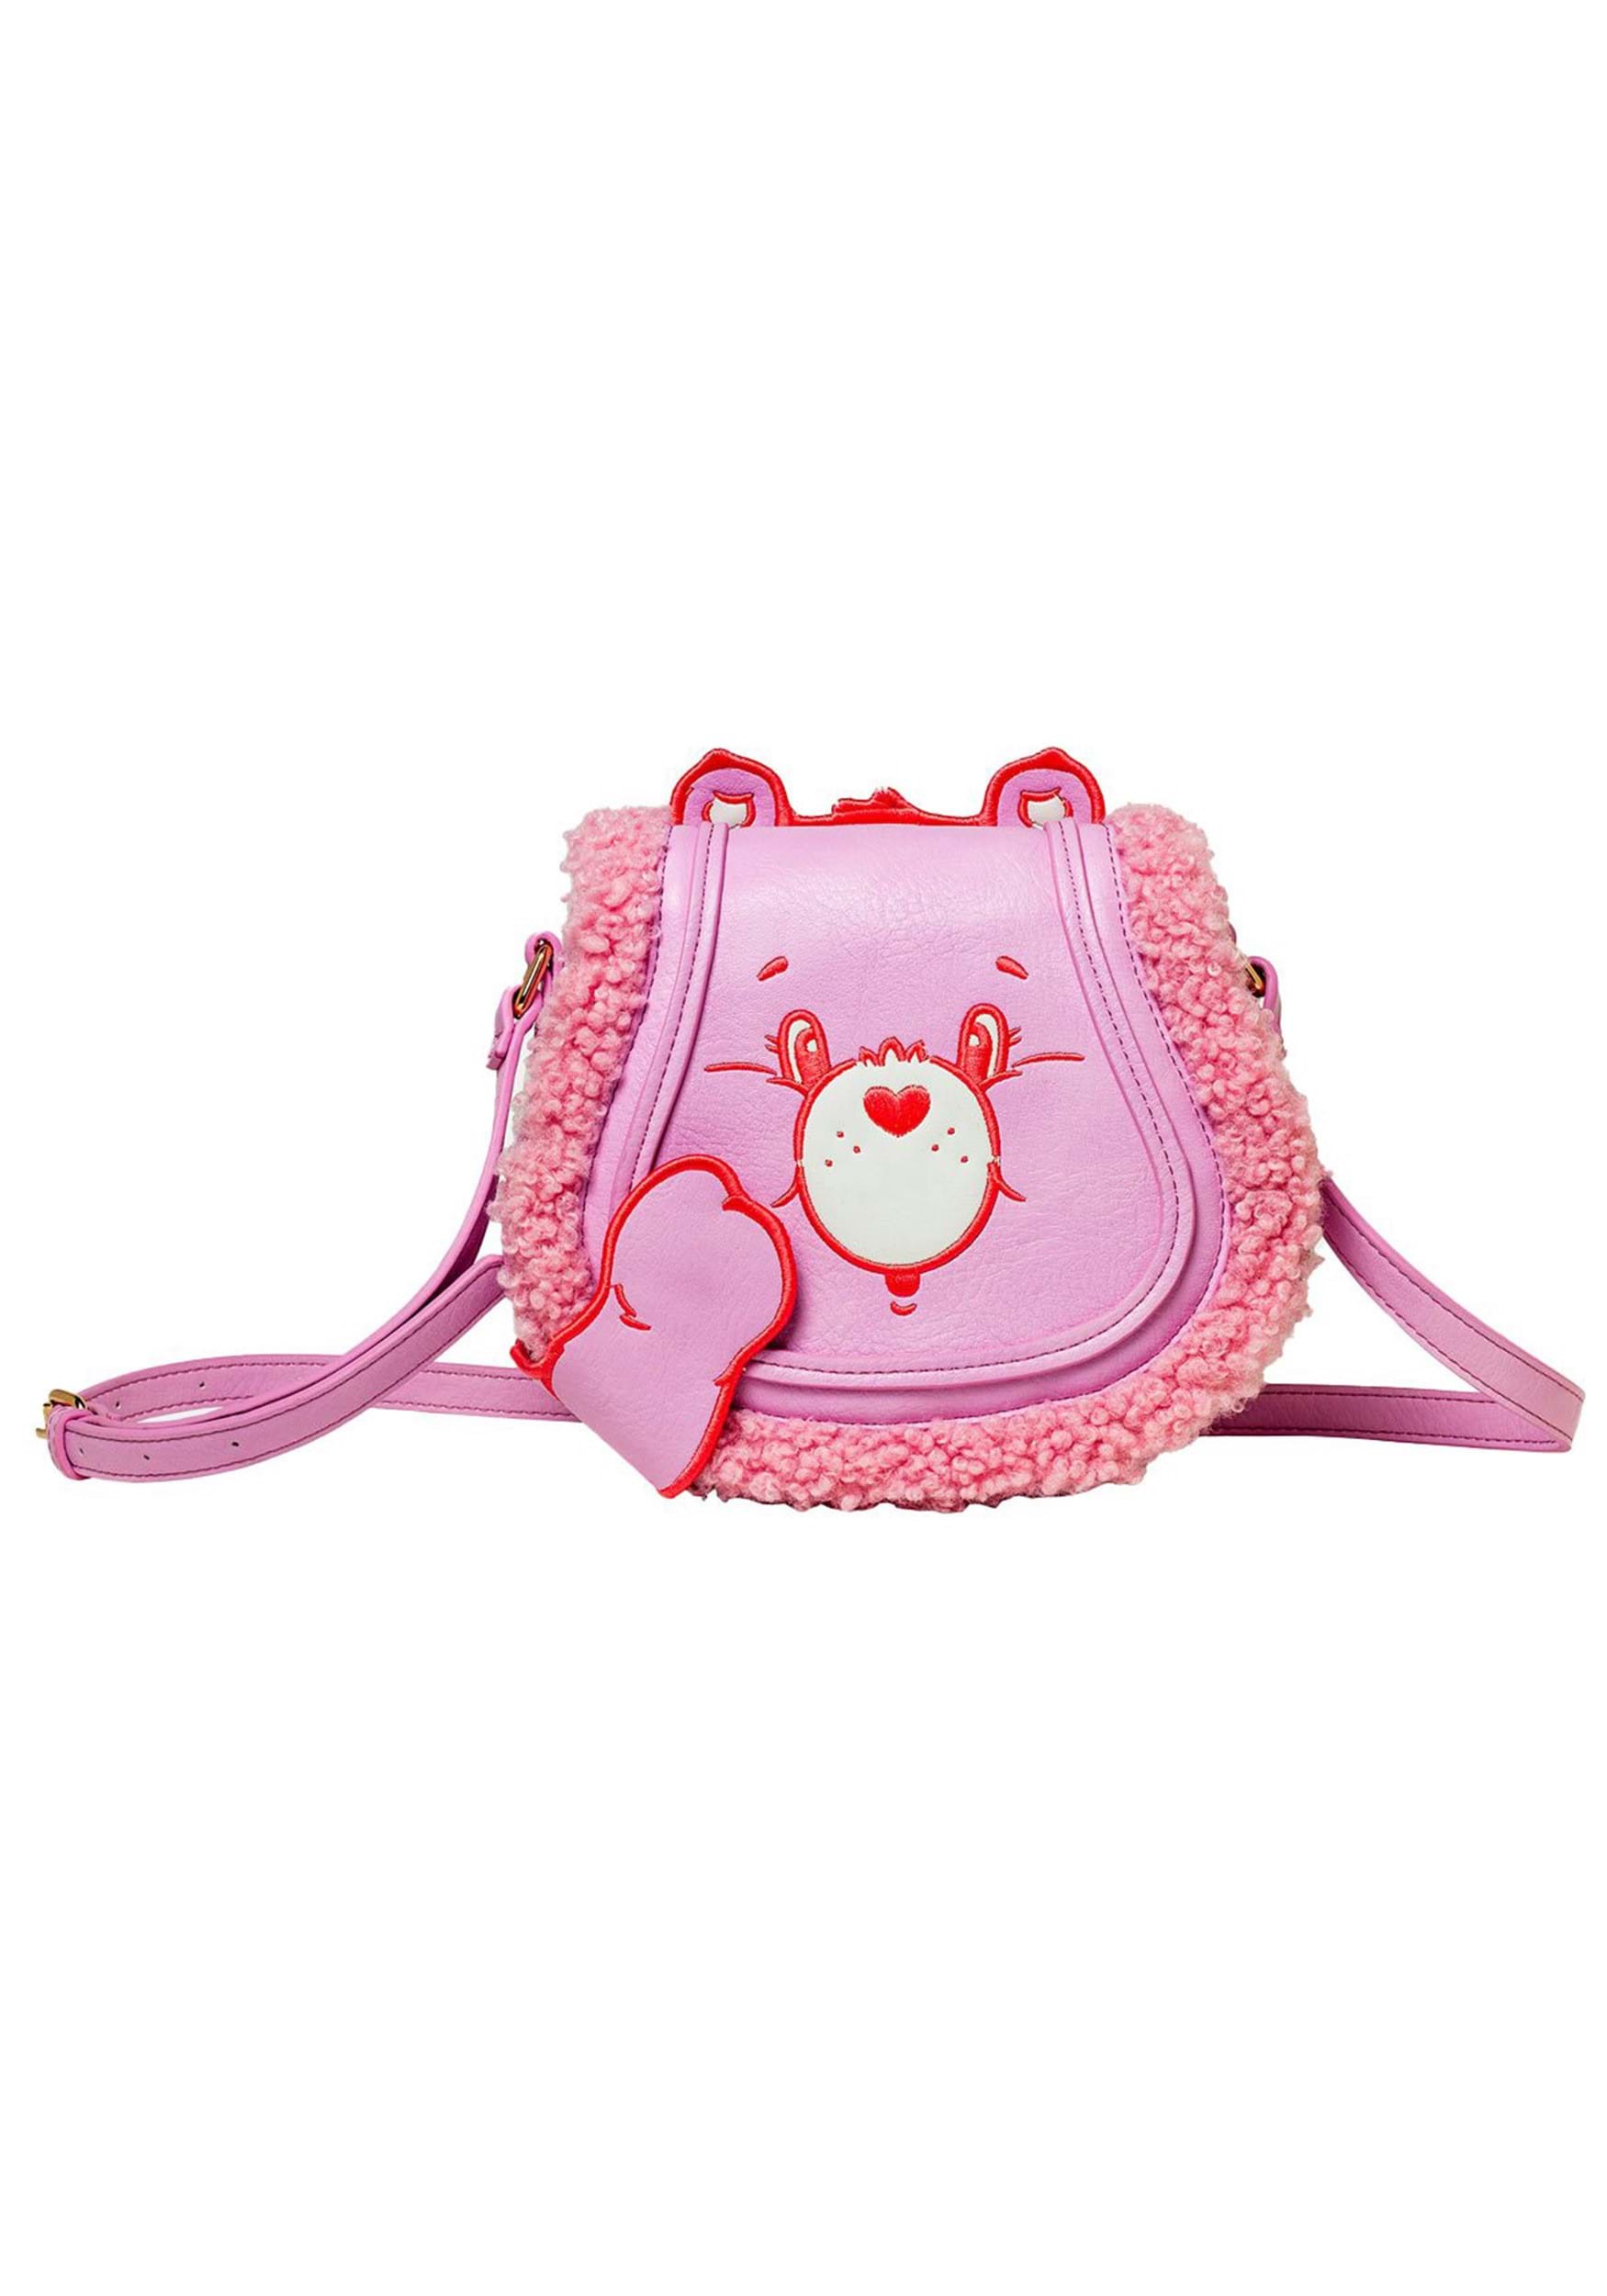 Image of Danielle Nicole Care Bears Love-A-Lot Bear Crossbody Handbag | Care Bears Bags & Backpacks